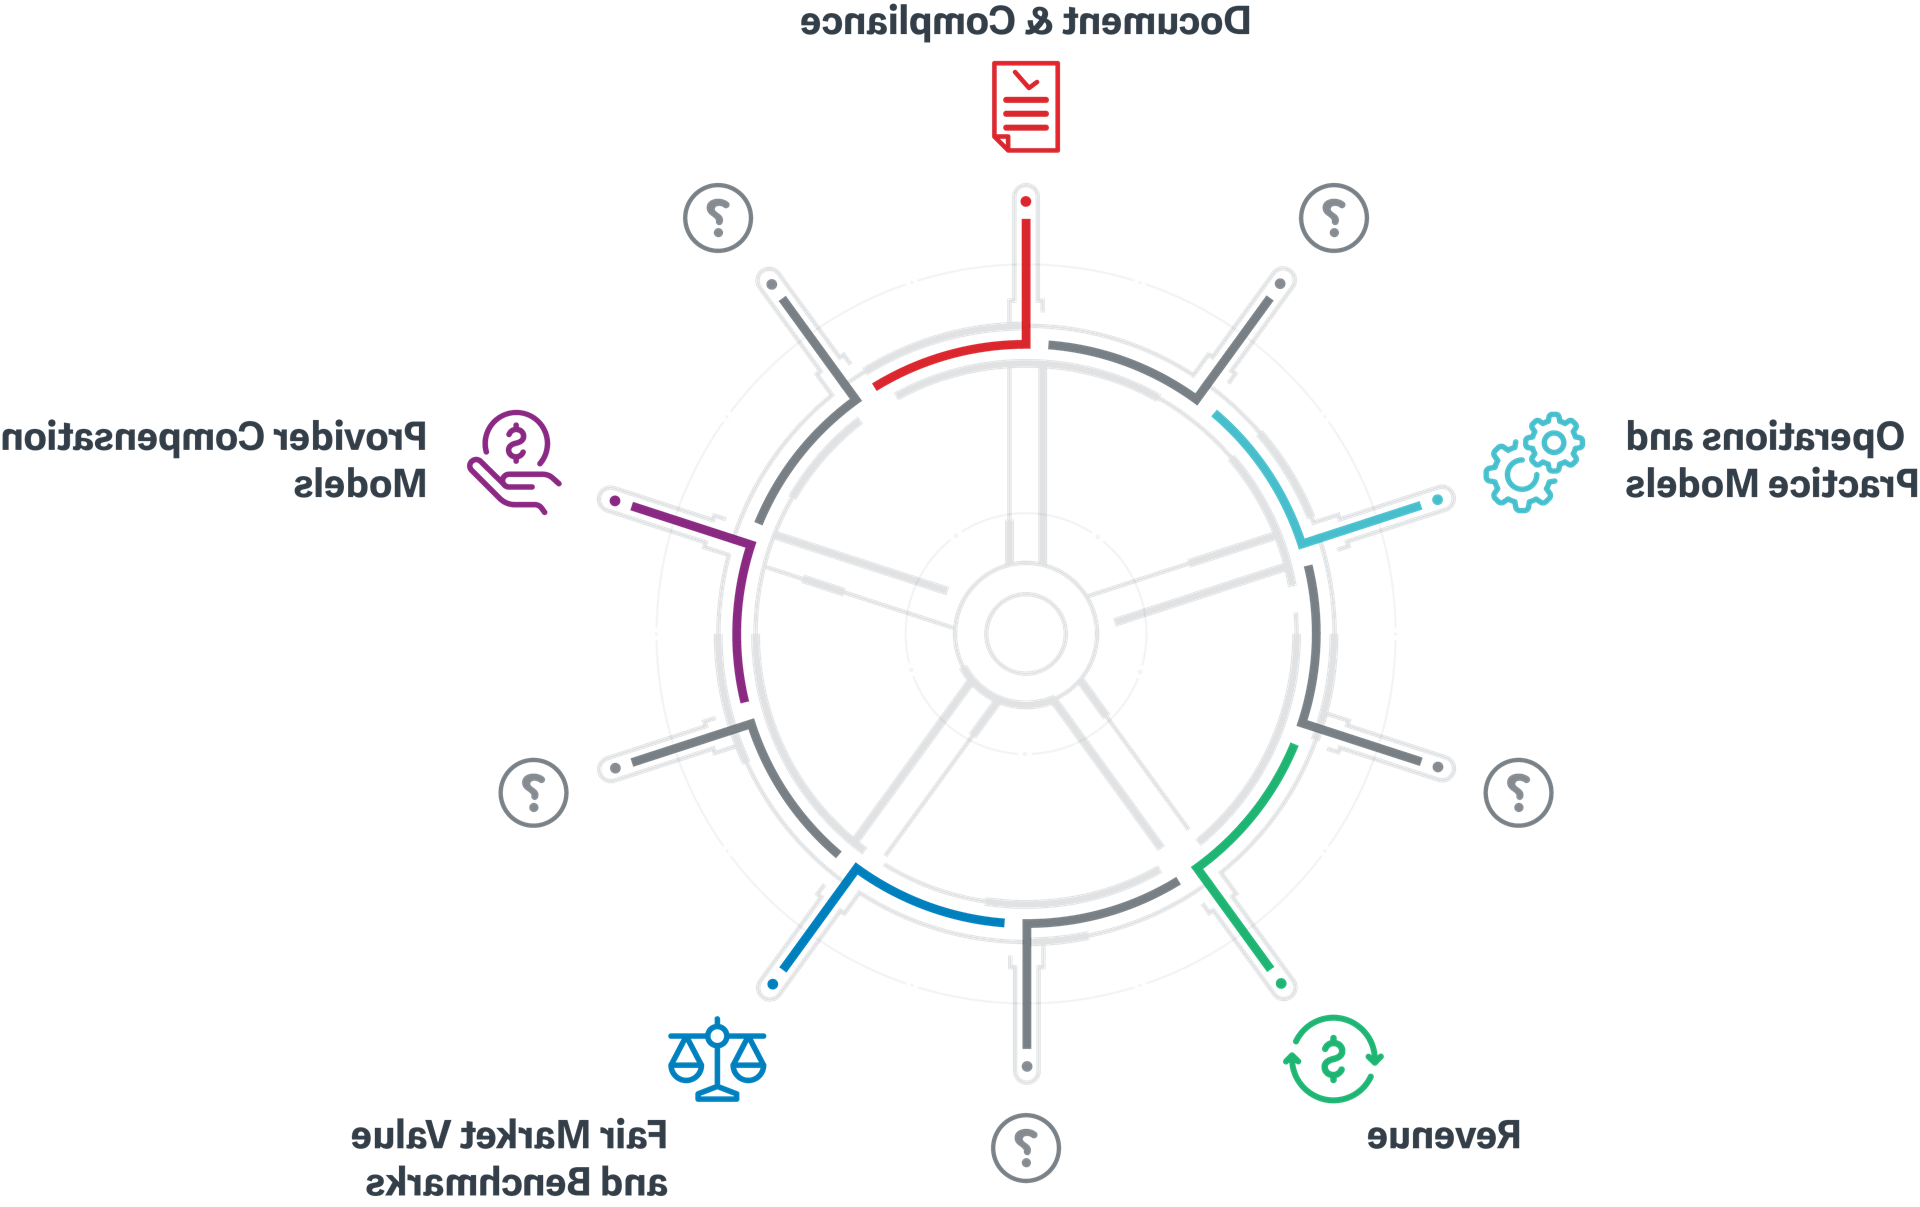 ECG wheel showing criteria for split/shared success